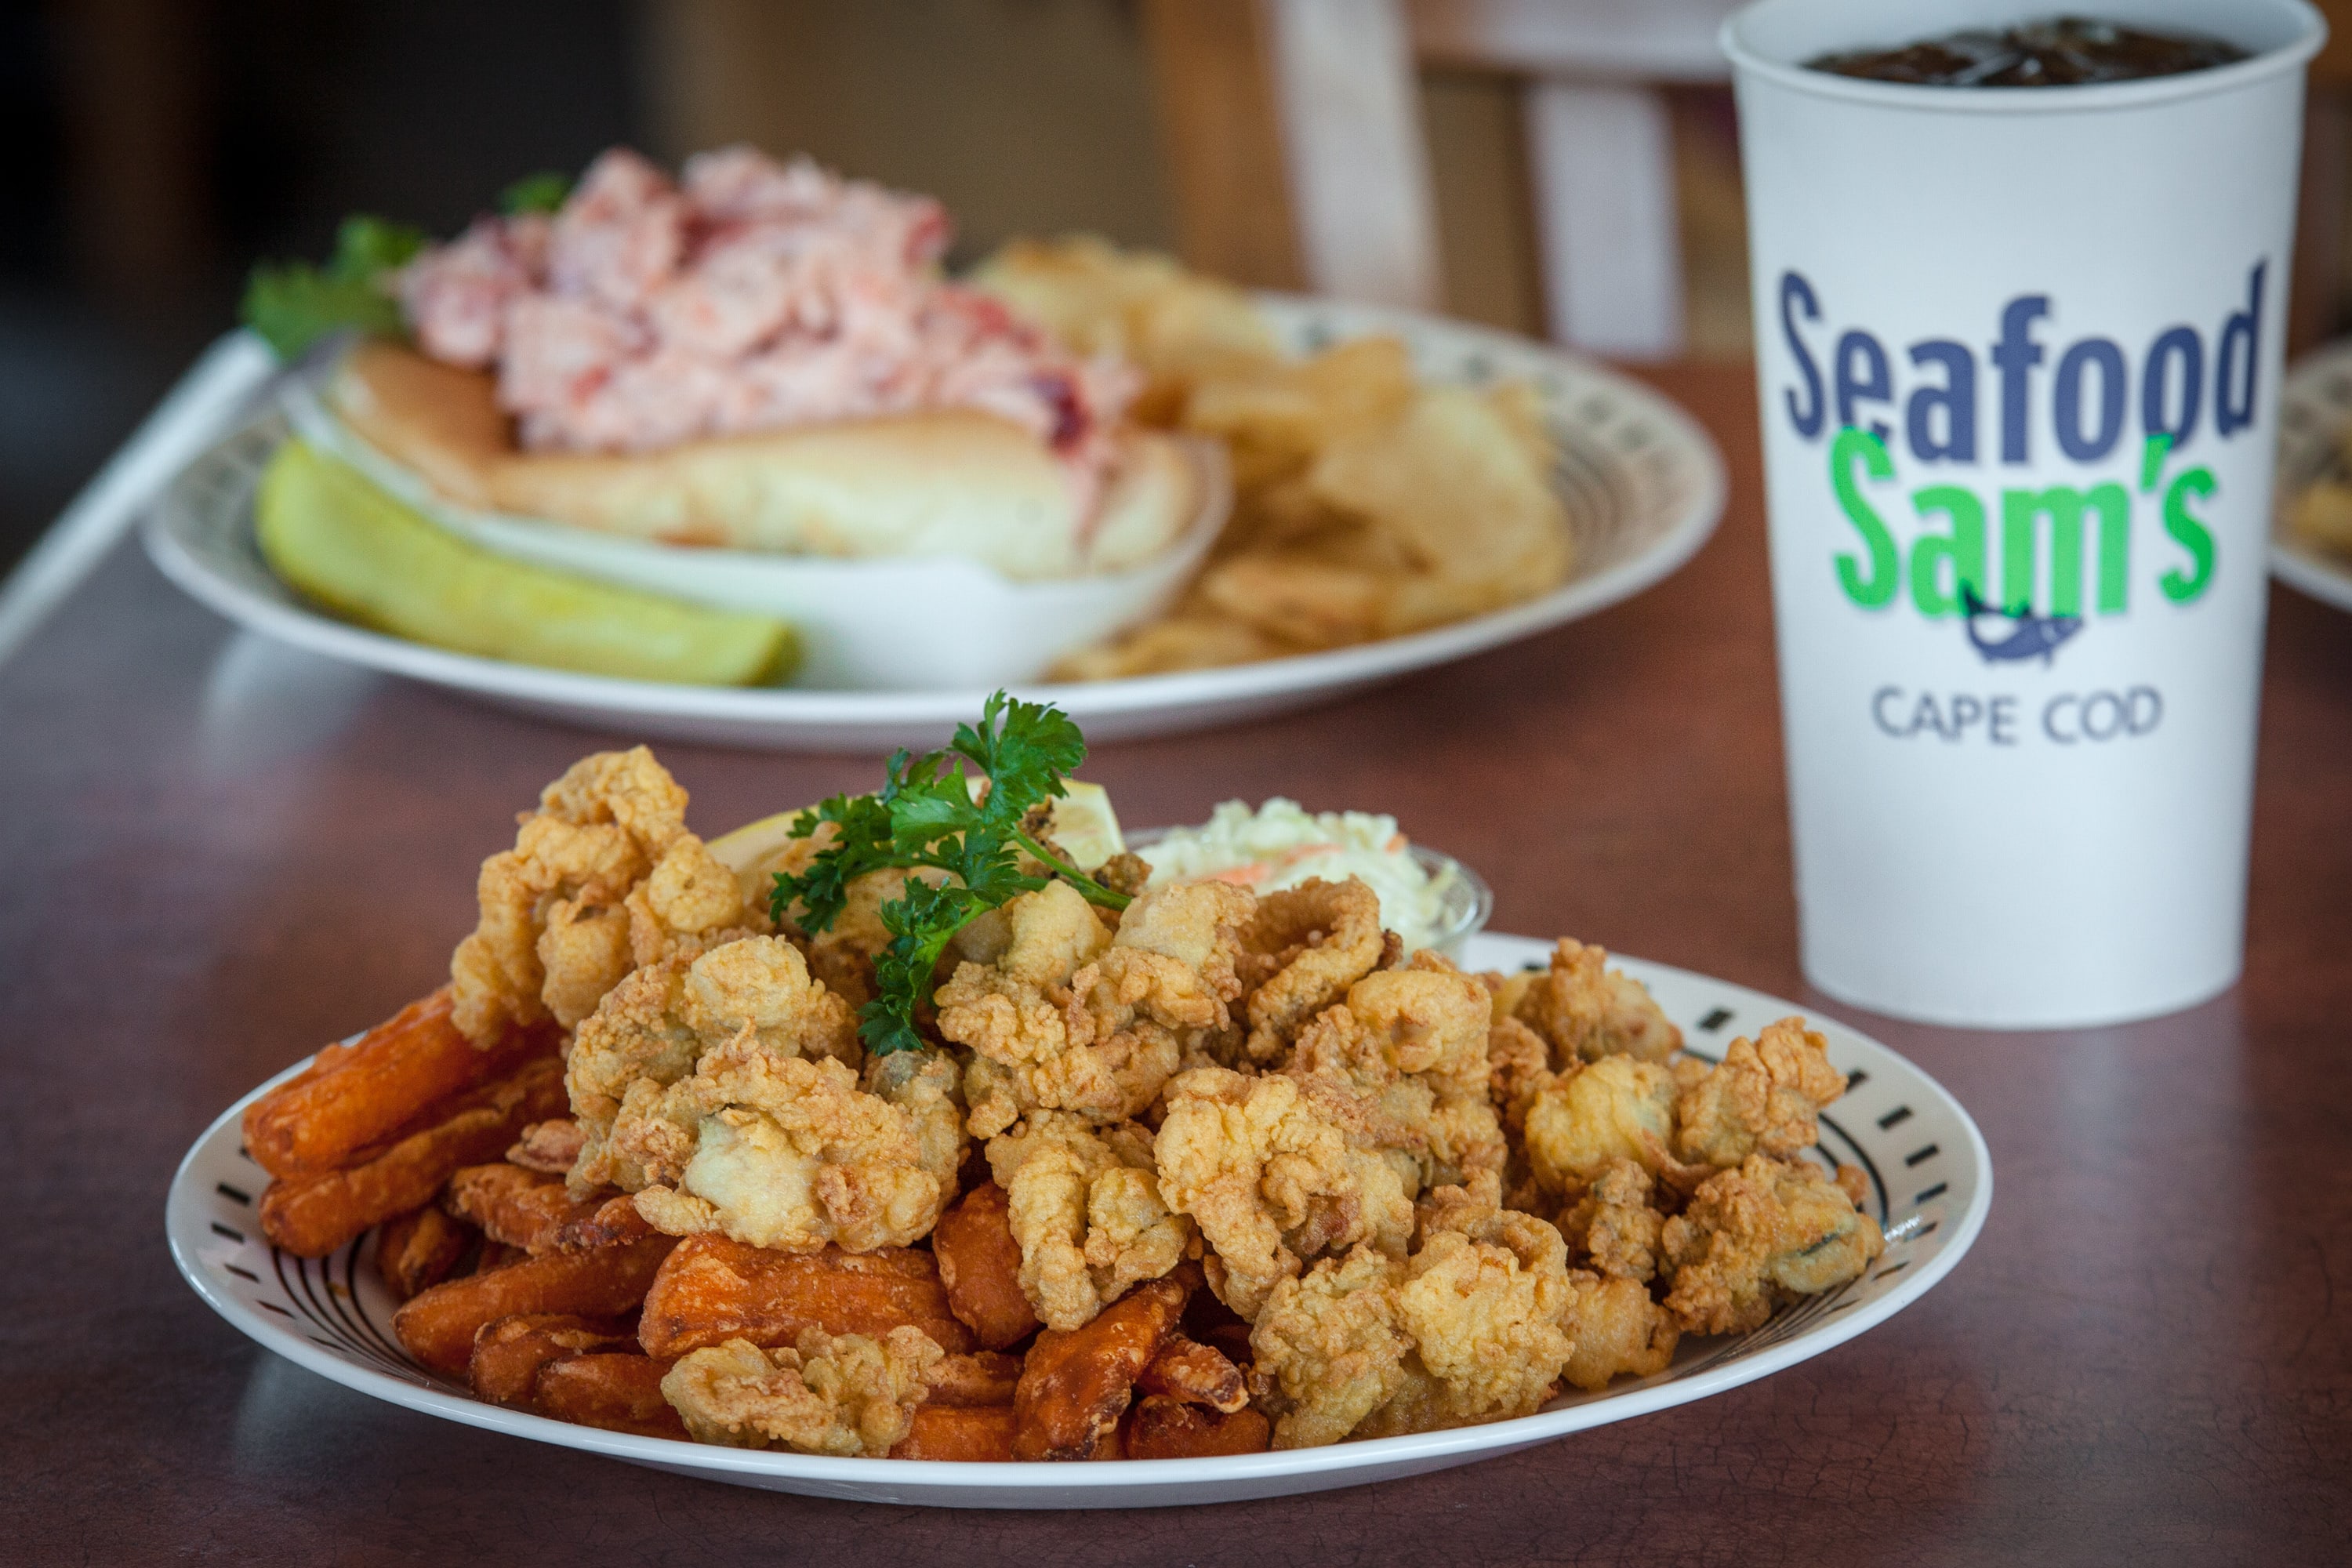 Welcome to Seafood Sam's - Seafood Sam's, Cape Cod, MA